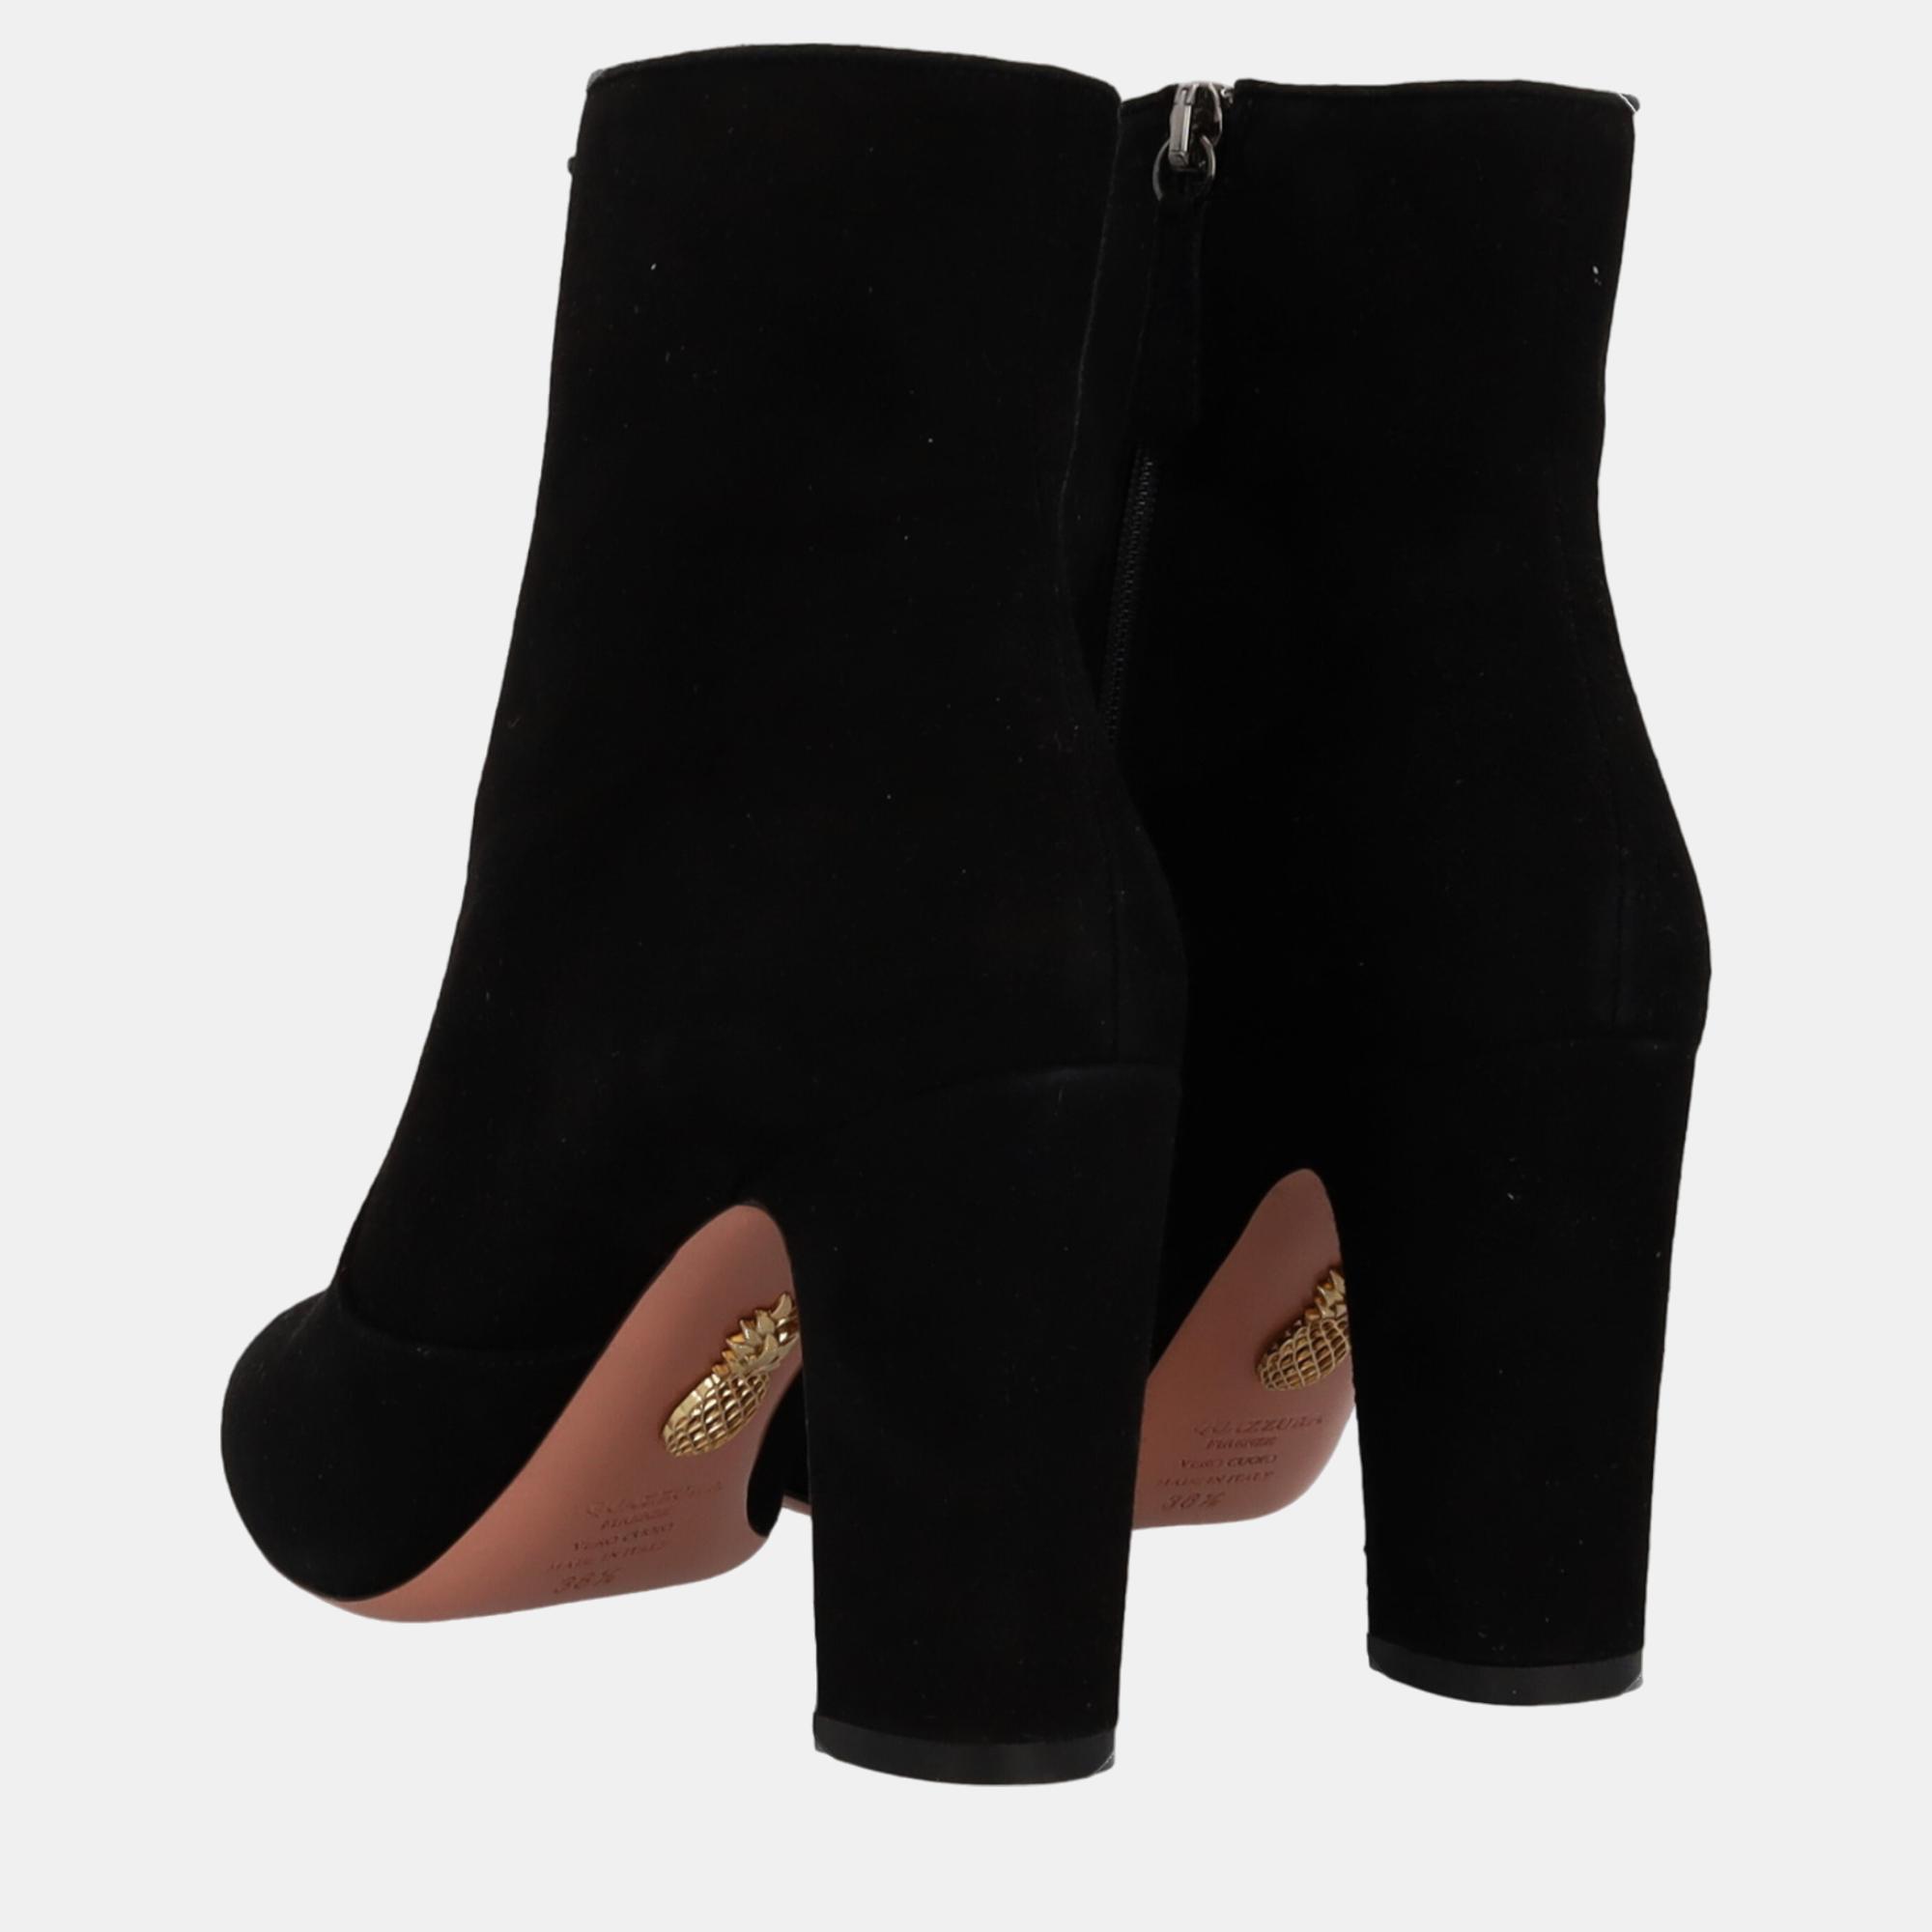 Aquazzura Women's Leather Ankle Boots - Black - EU 38.5